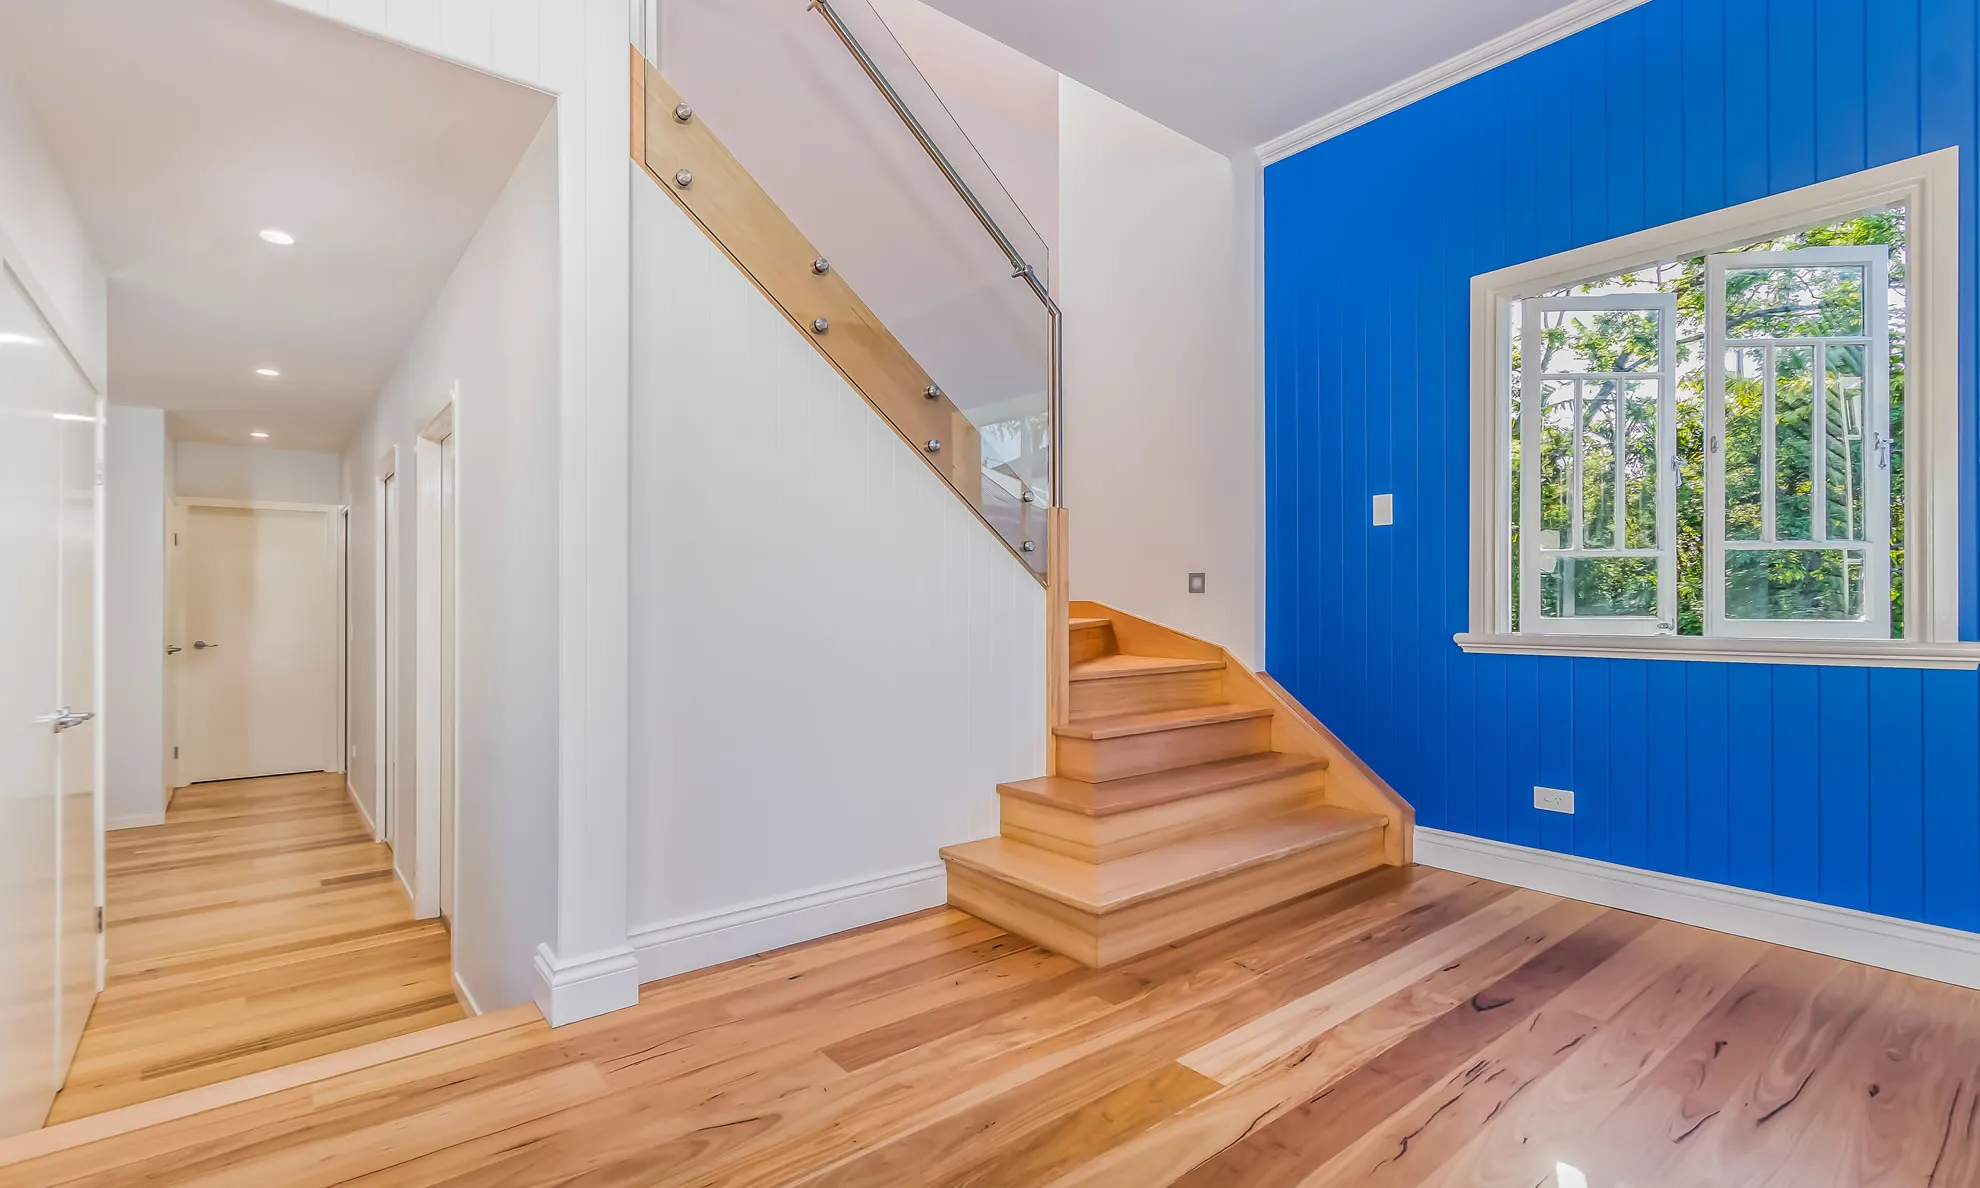 Stairs-glass balustrade-timber floor